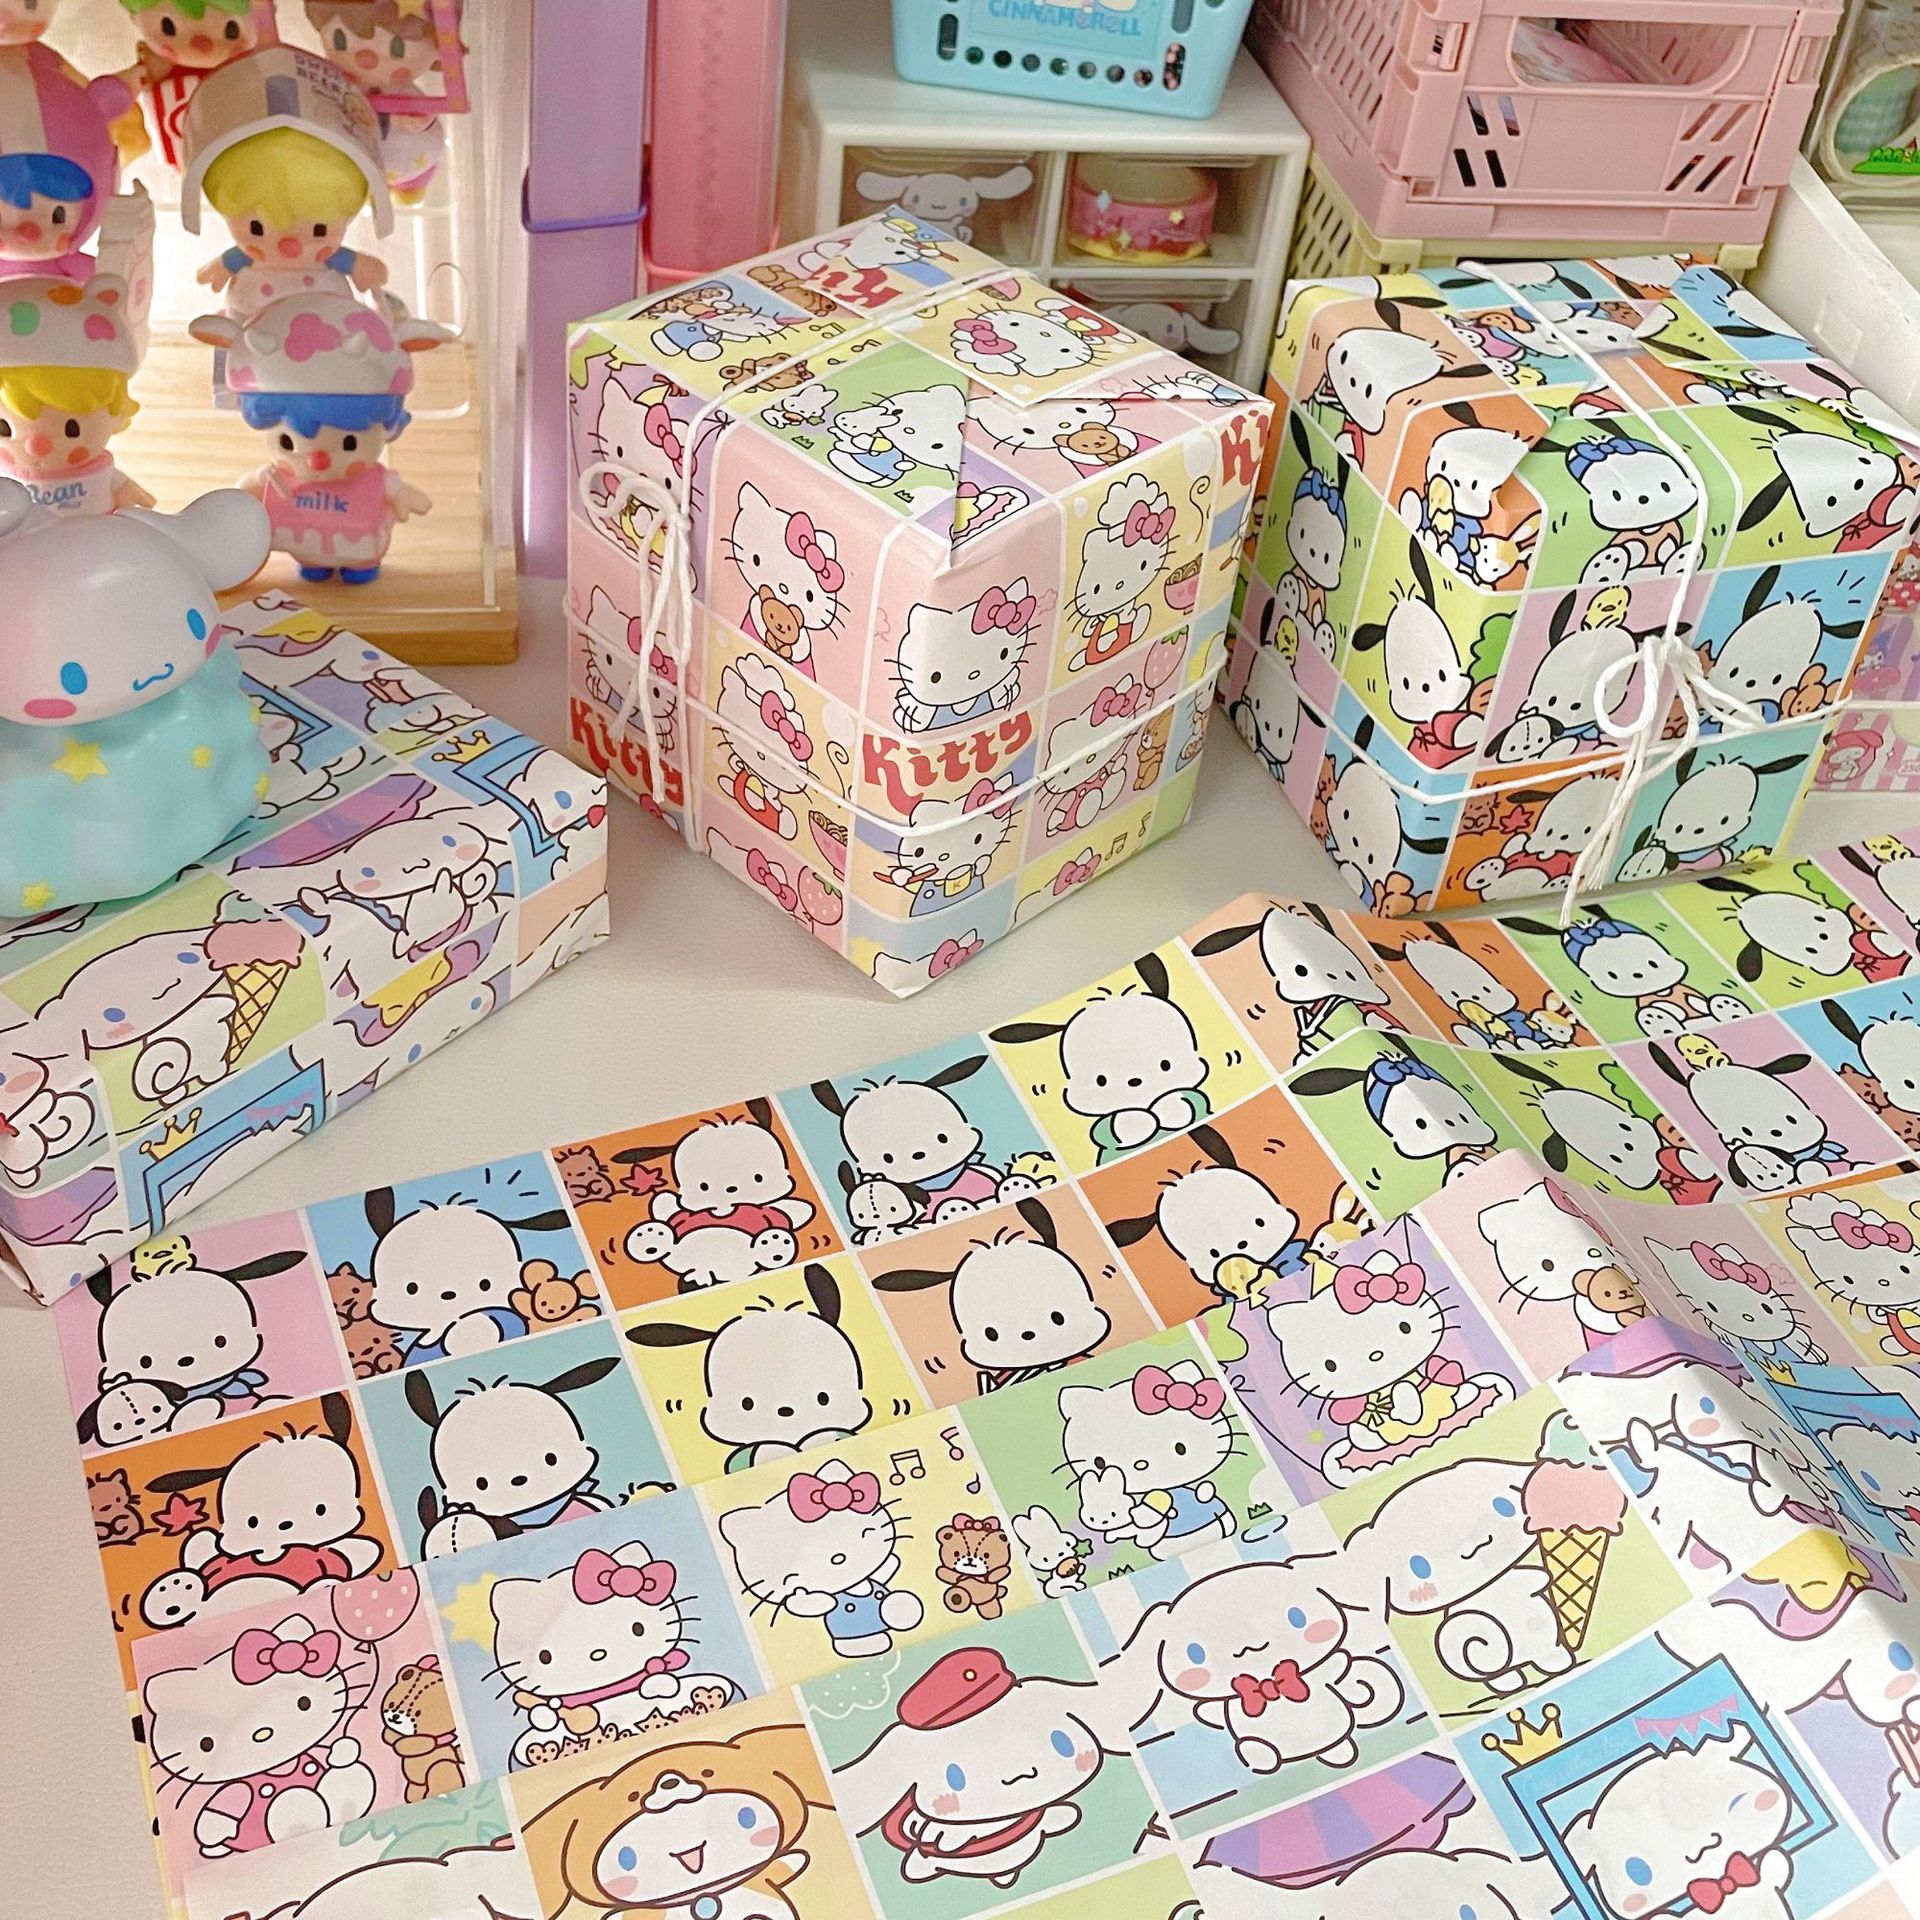 Shop Anime Tissue Box online | Lazada.com.ph